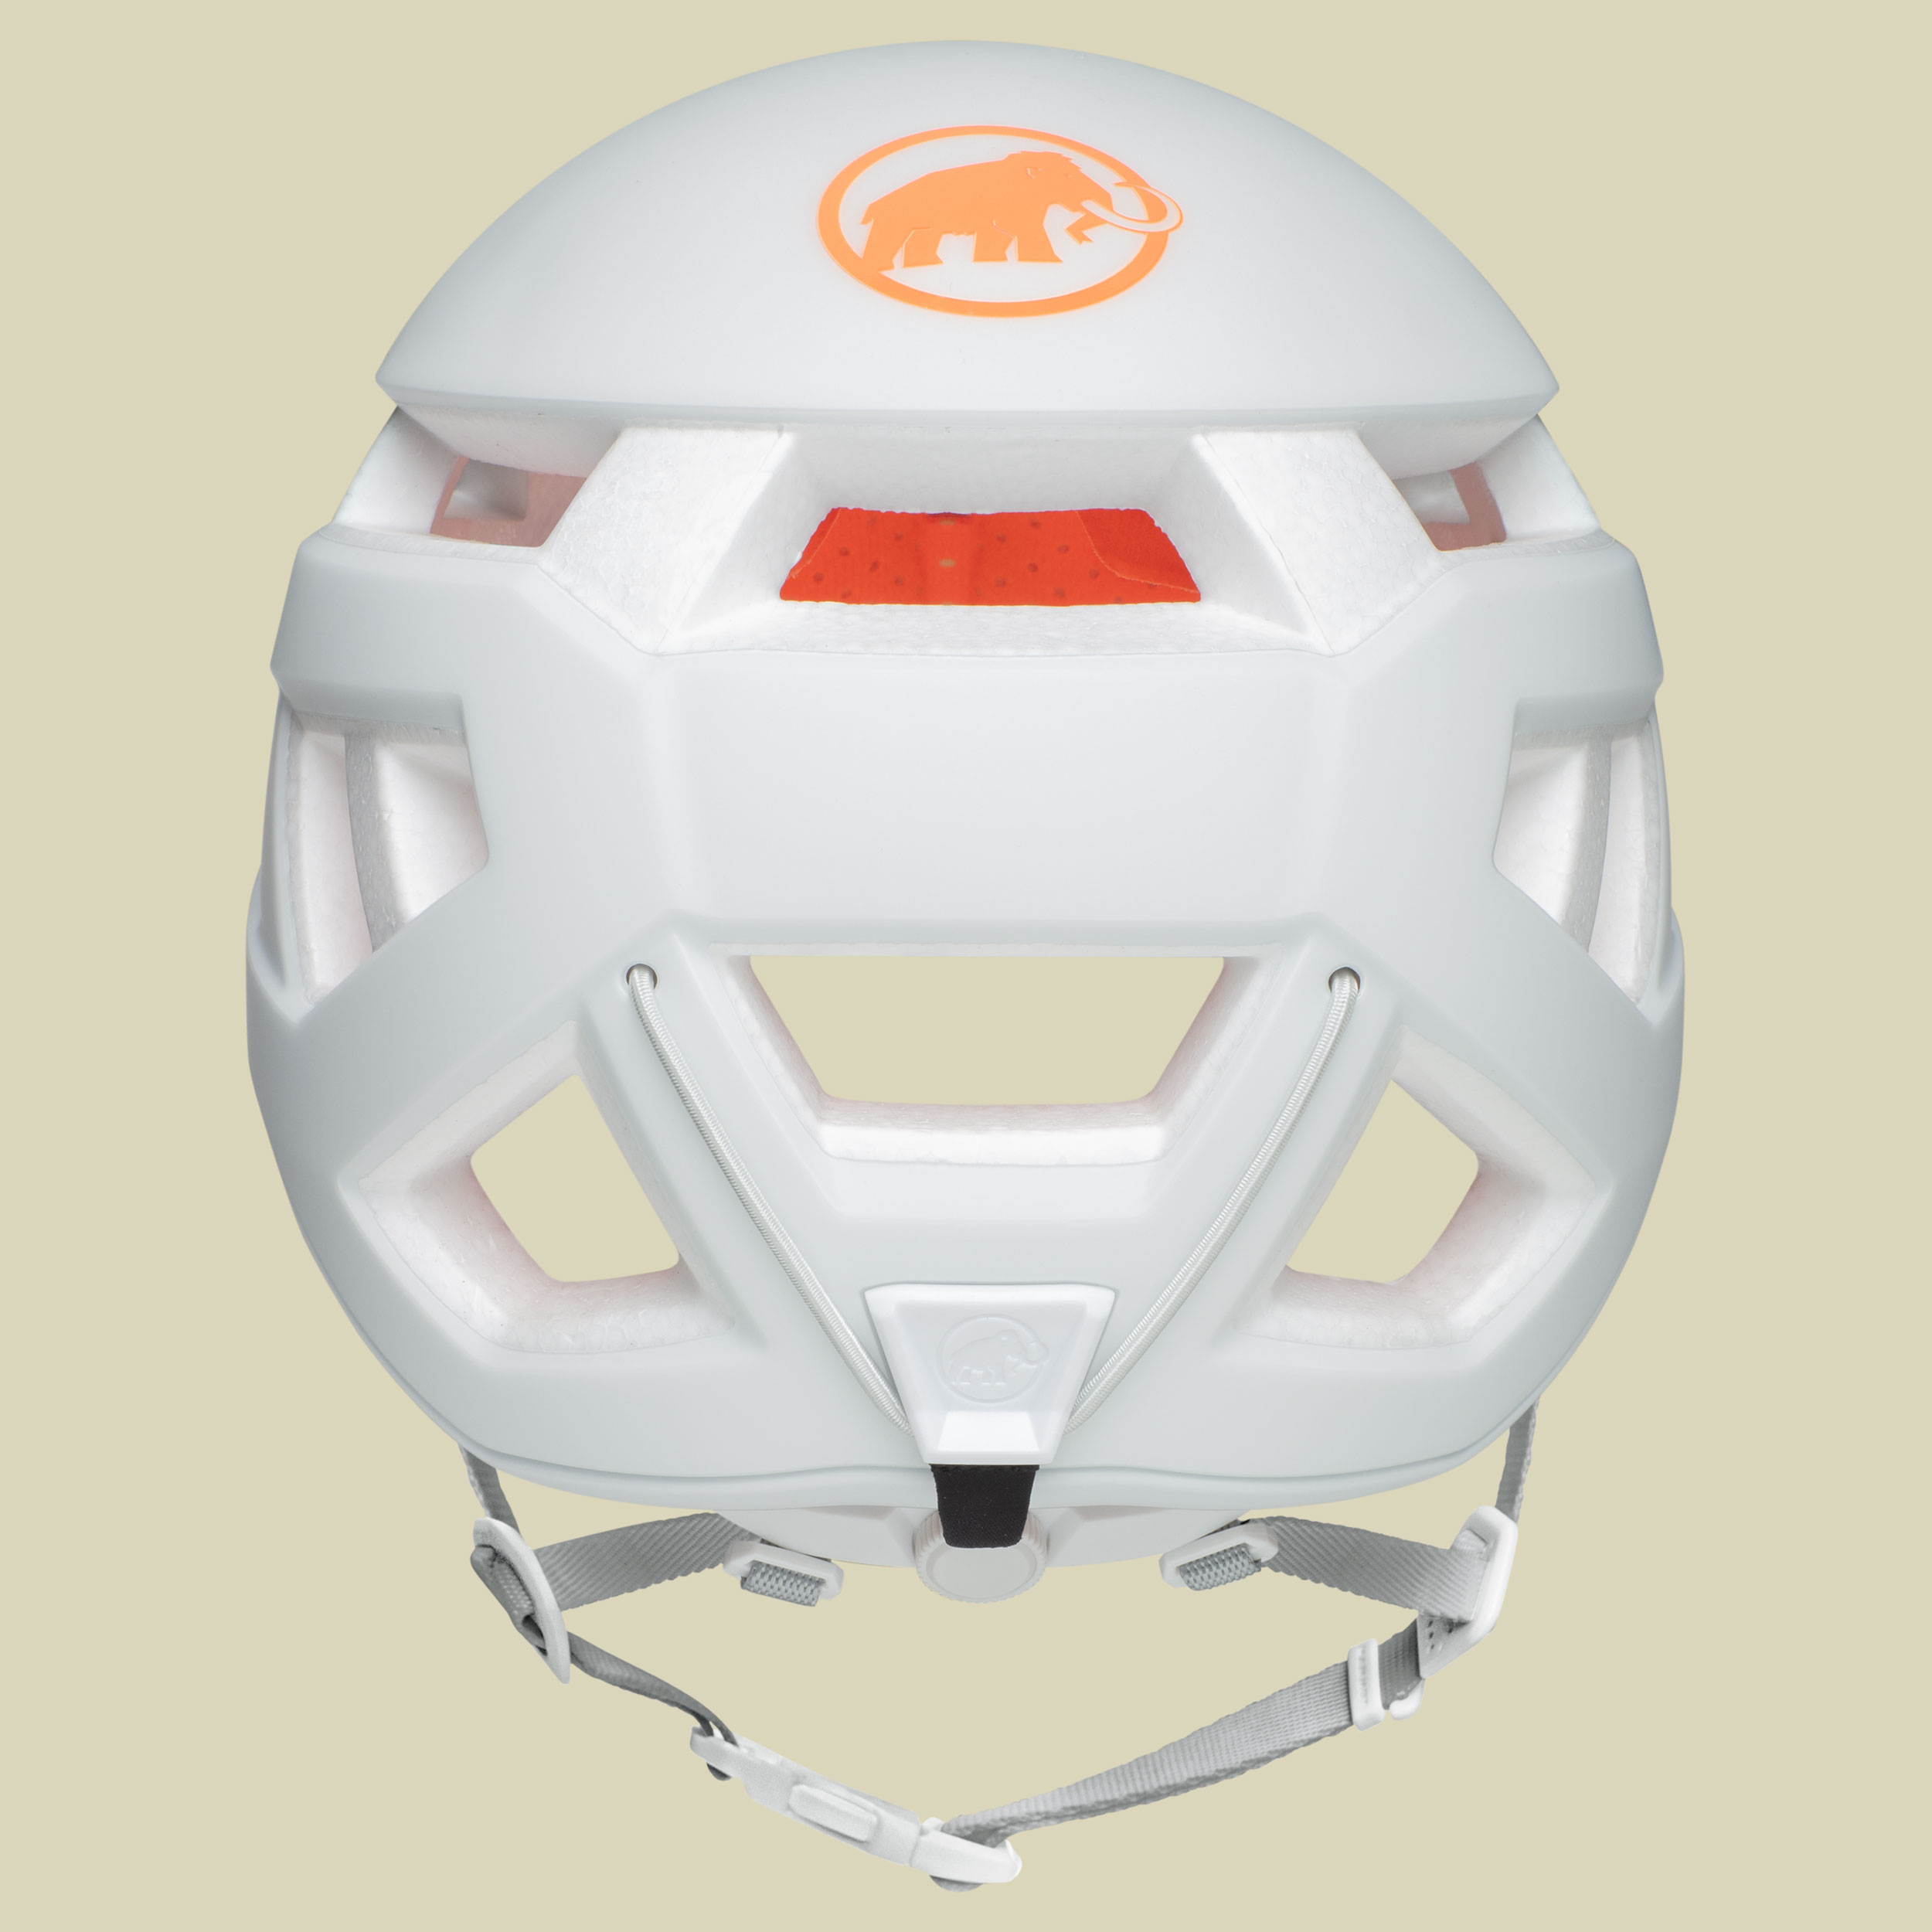 Crag Sender Helmet Größe 56-61 cm Farbe white